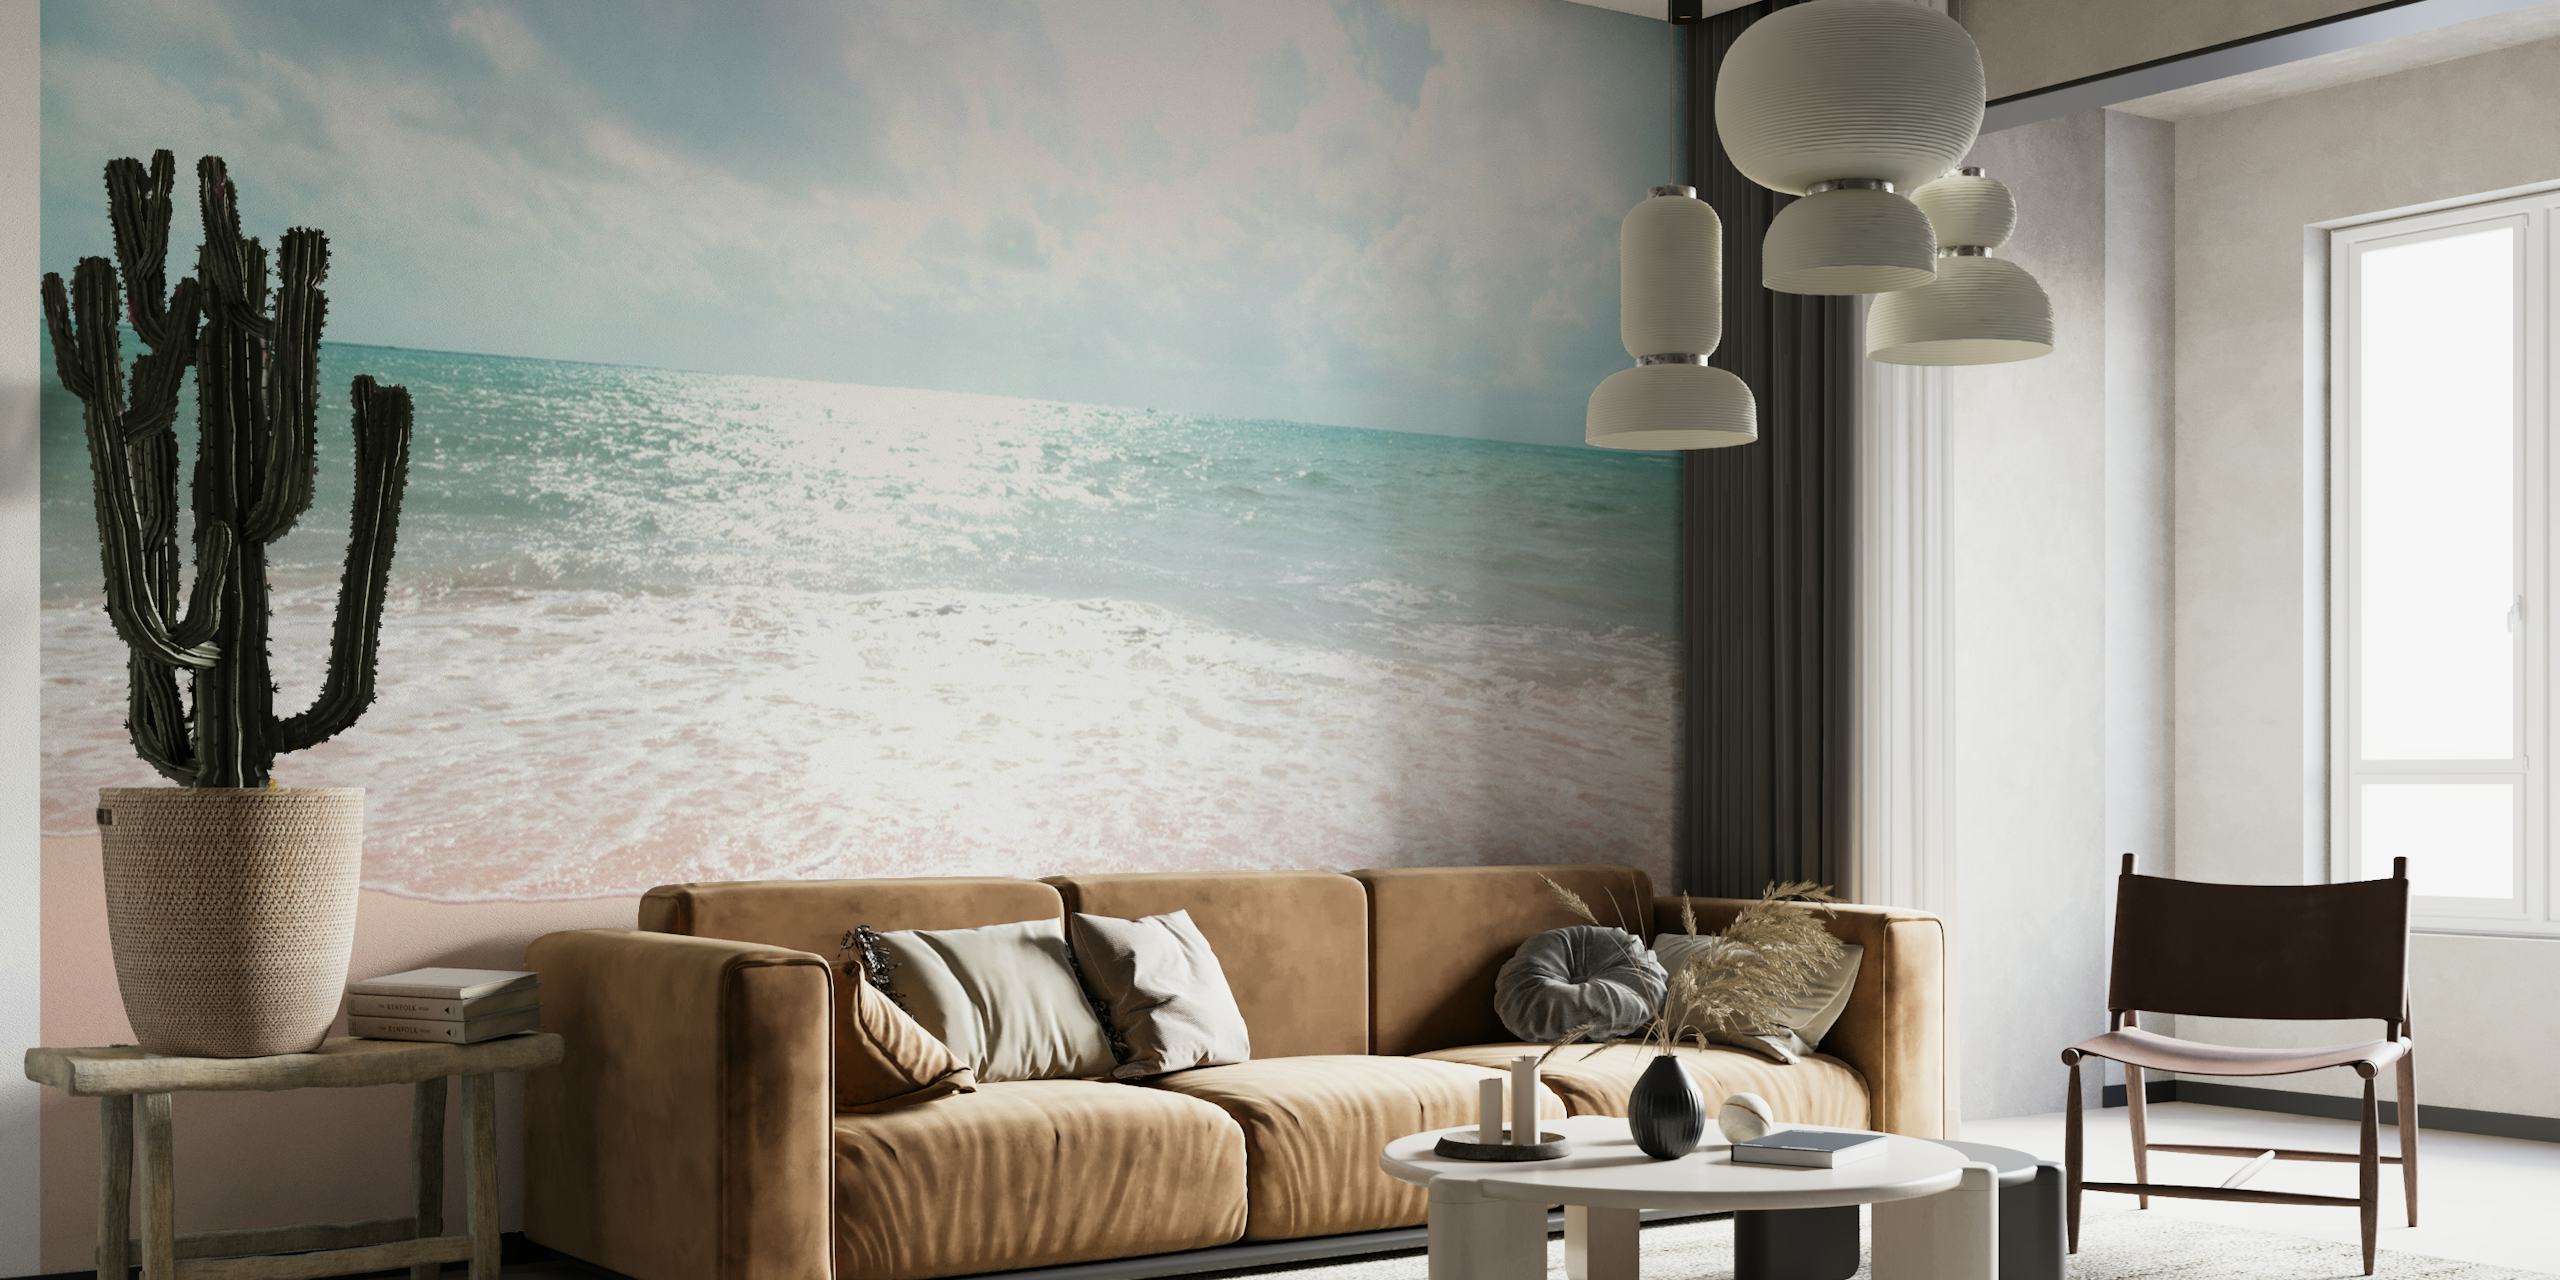 Zidna slika Caribbean Ocean Tranquility 2 koja prikazuje mirnu plažu i blage valove